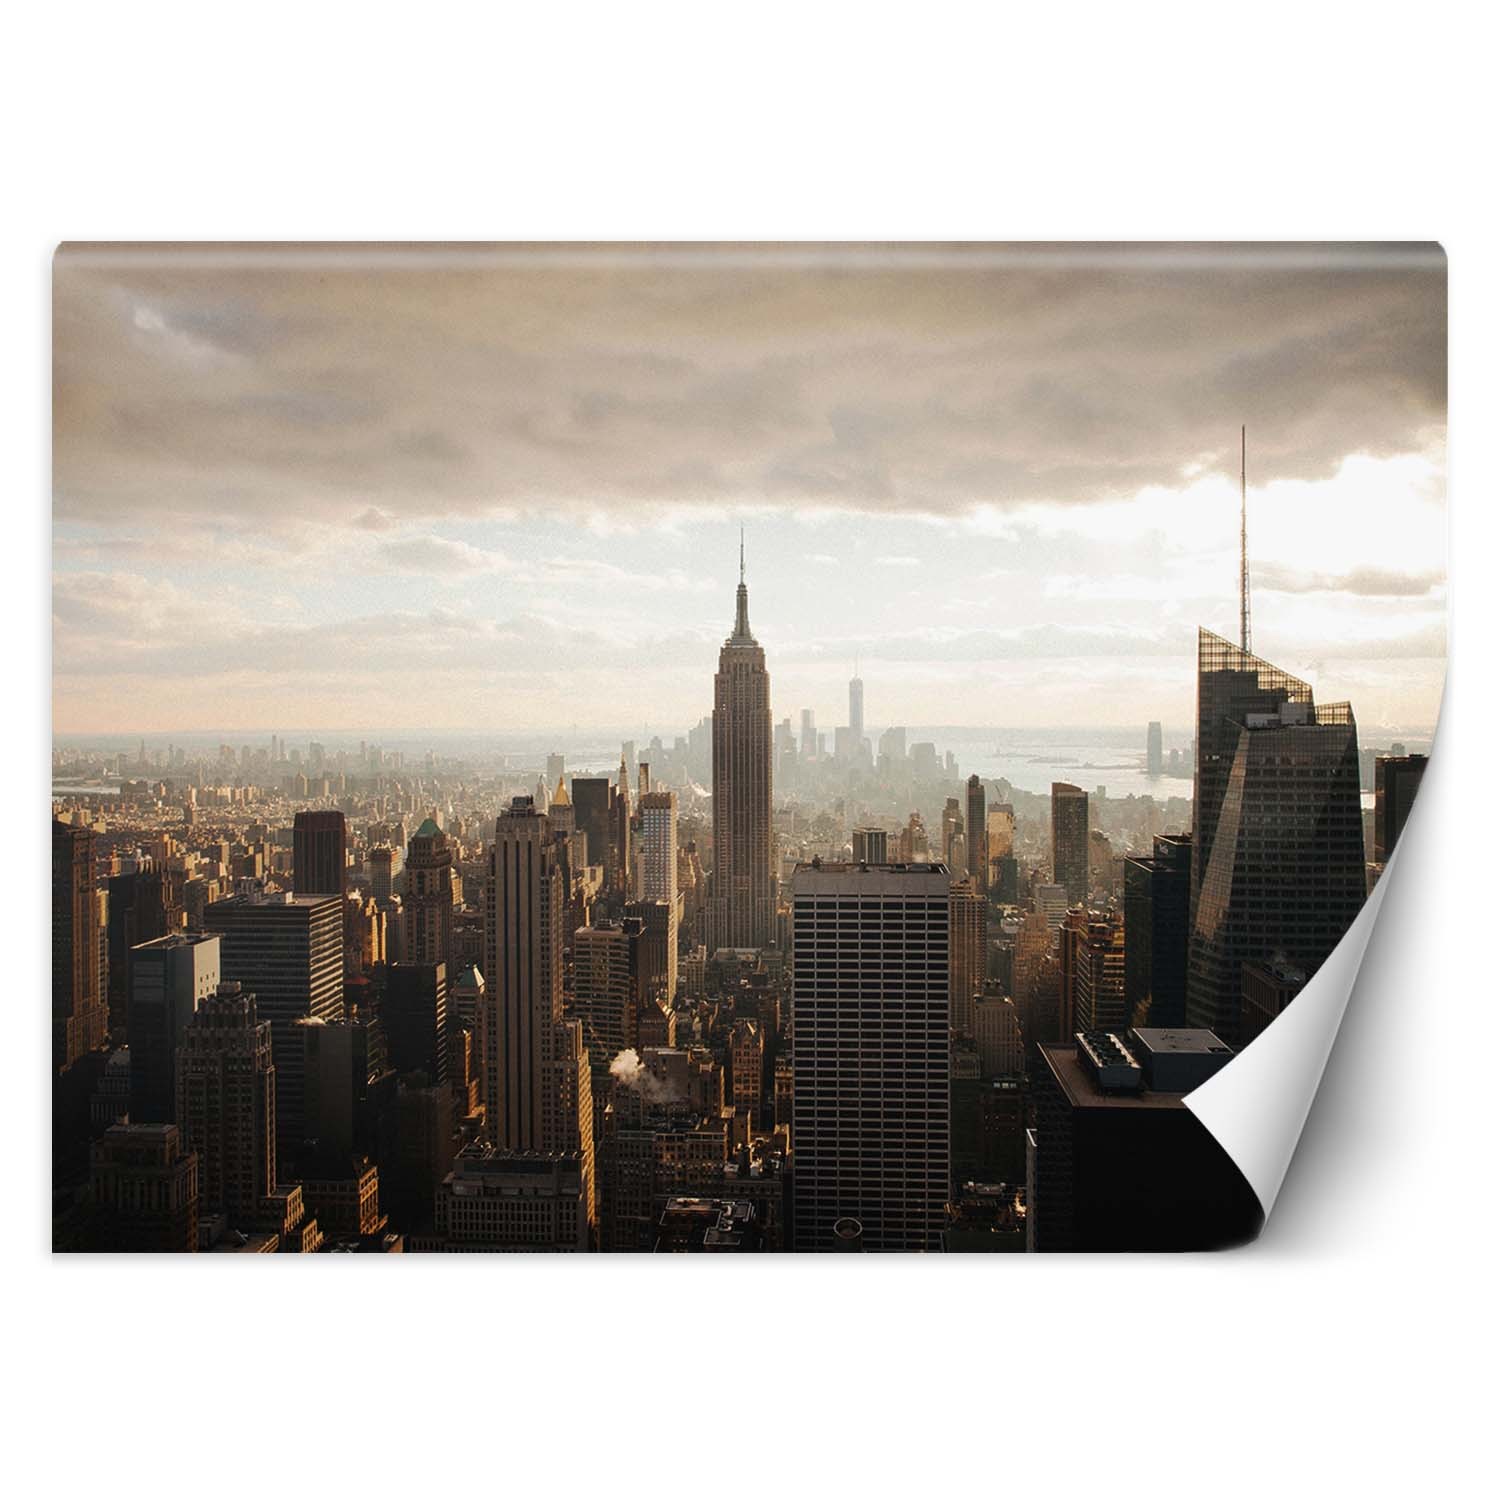 Trend24 – Behang – New York – Manhattan – Vliesbehang – Fotobehang – Behang Woonkamer – 450×315 cm – Incl. behanglijm